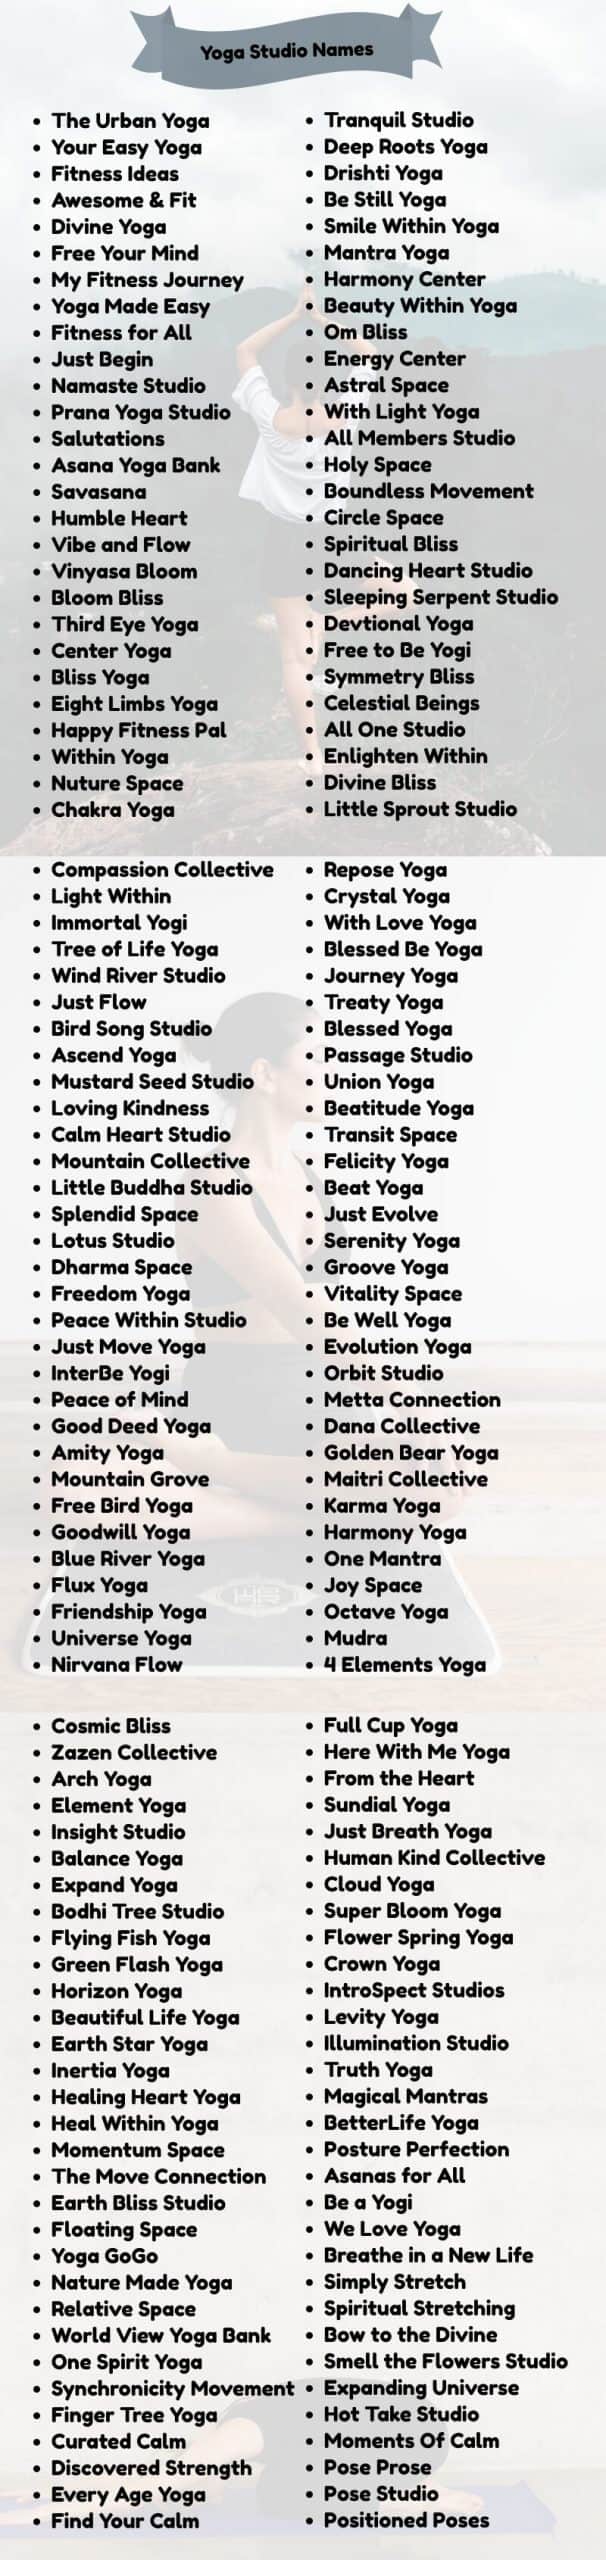 Yoga Studio Names